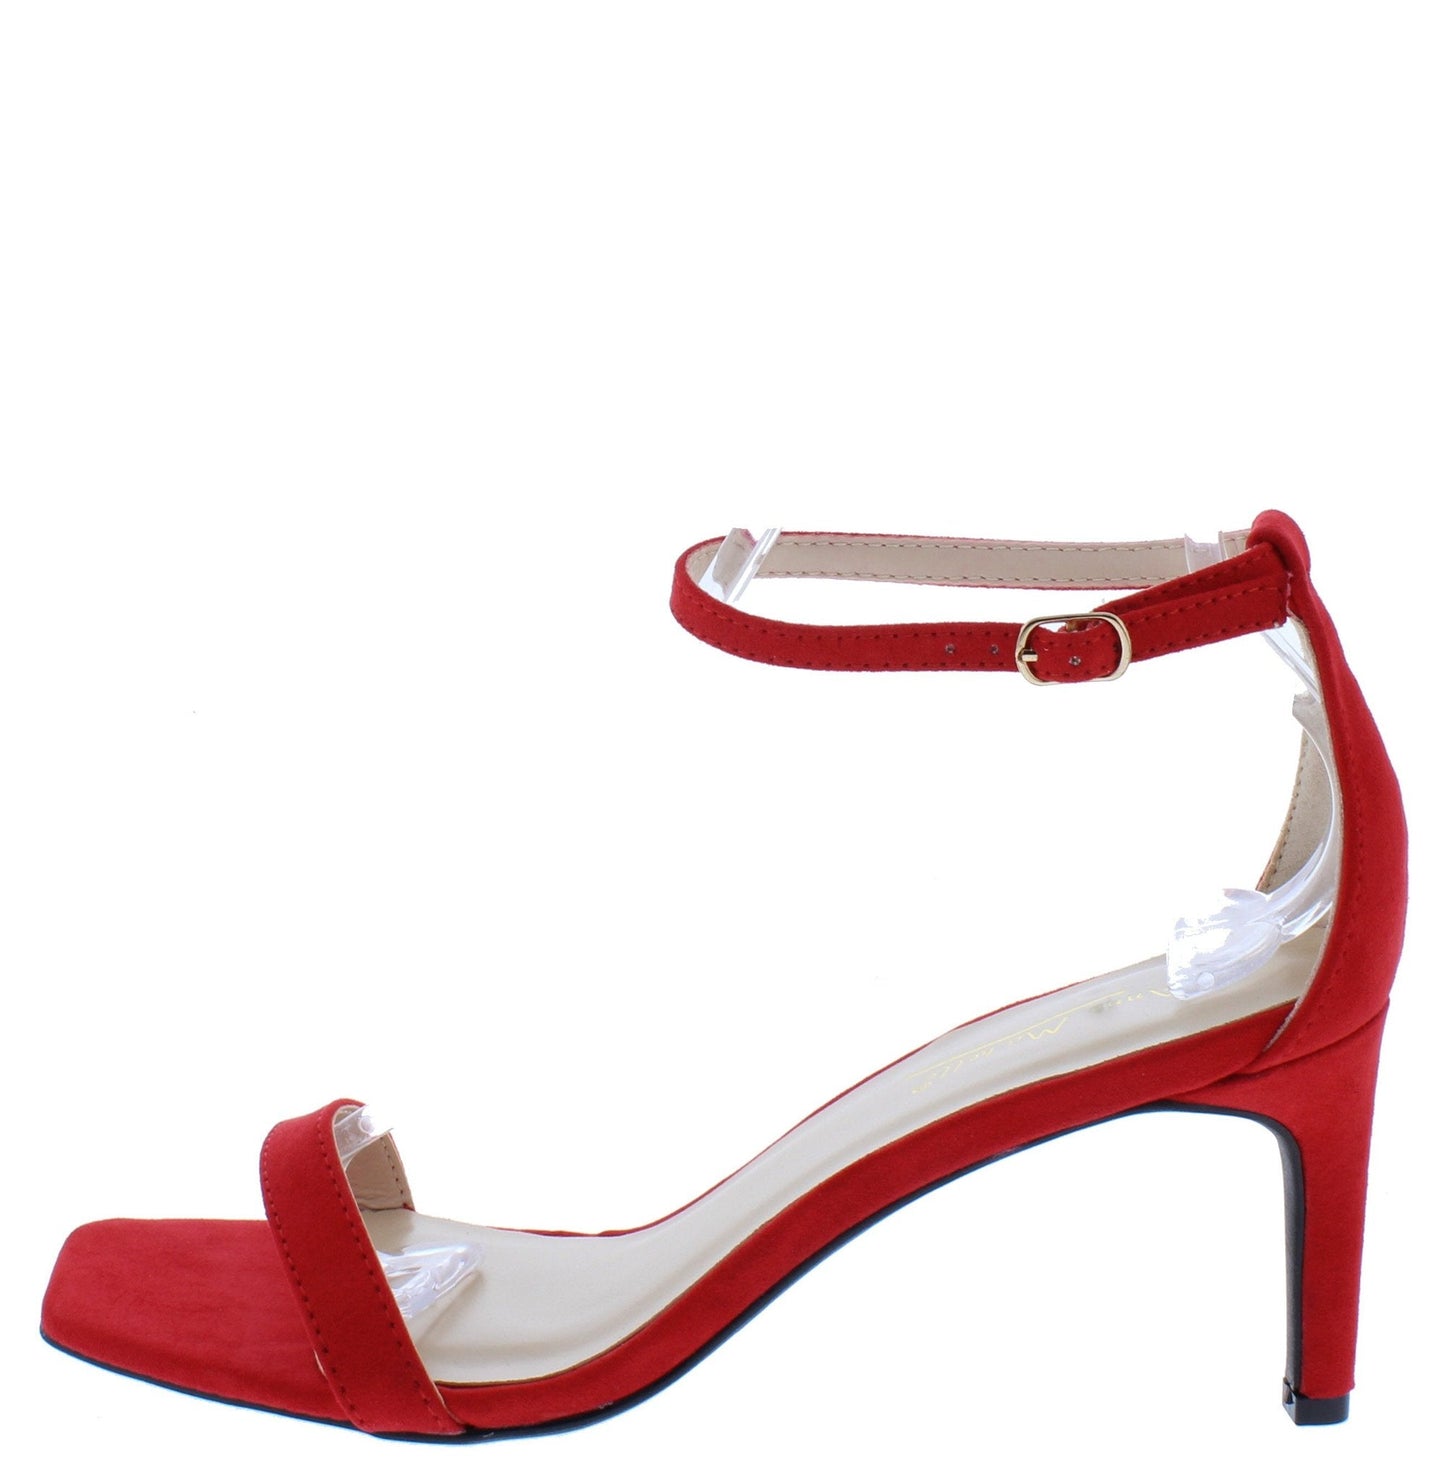 "Tiara" Red Low Heels